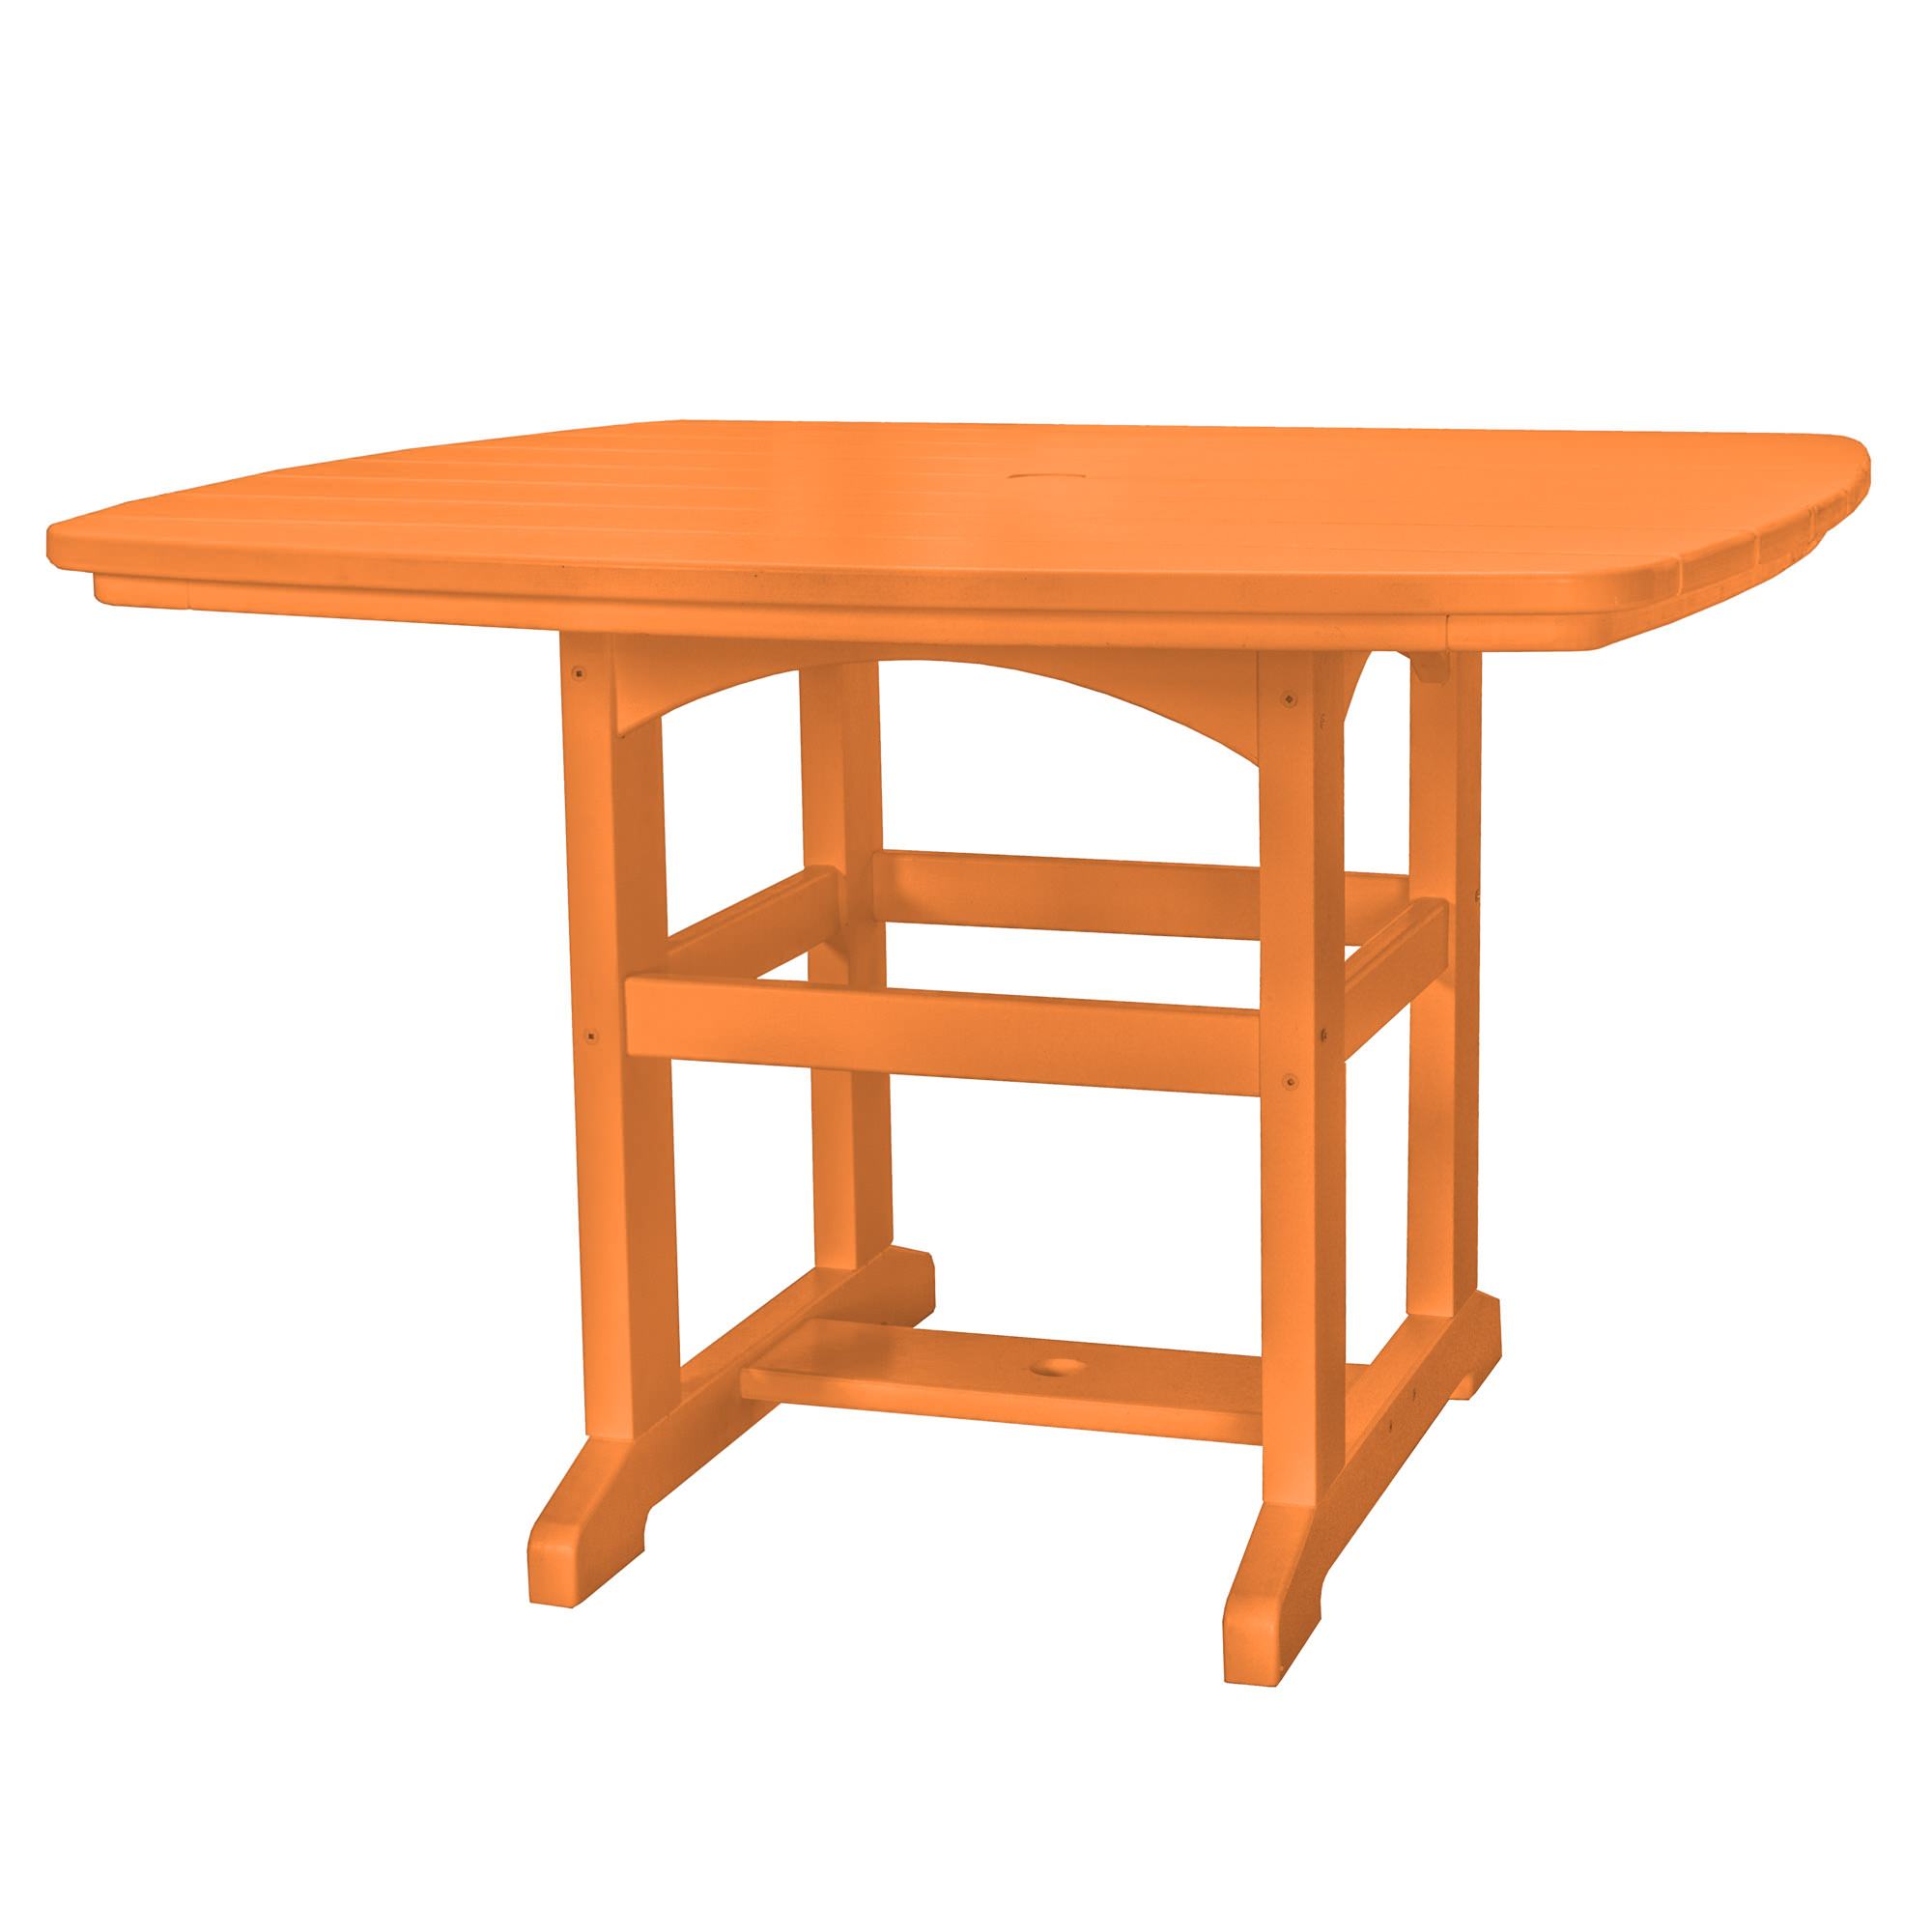 46 inch Orange Durawood Dining Table | Pawleys Island Hammocks